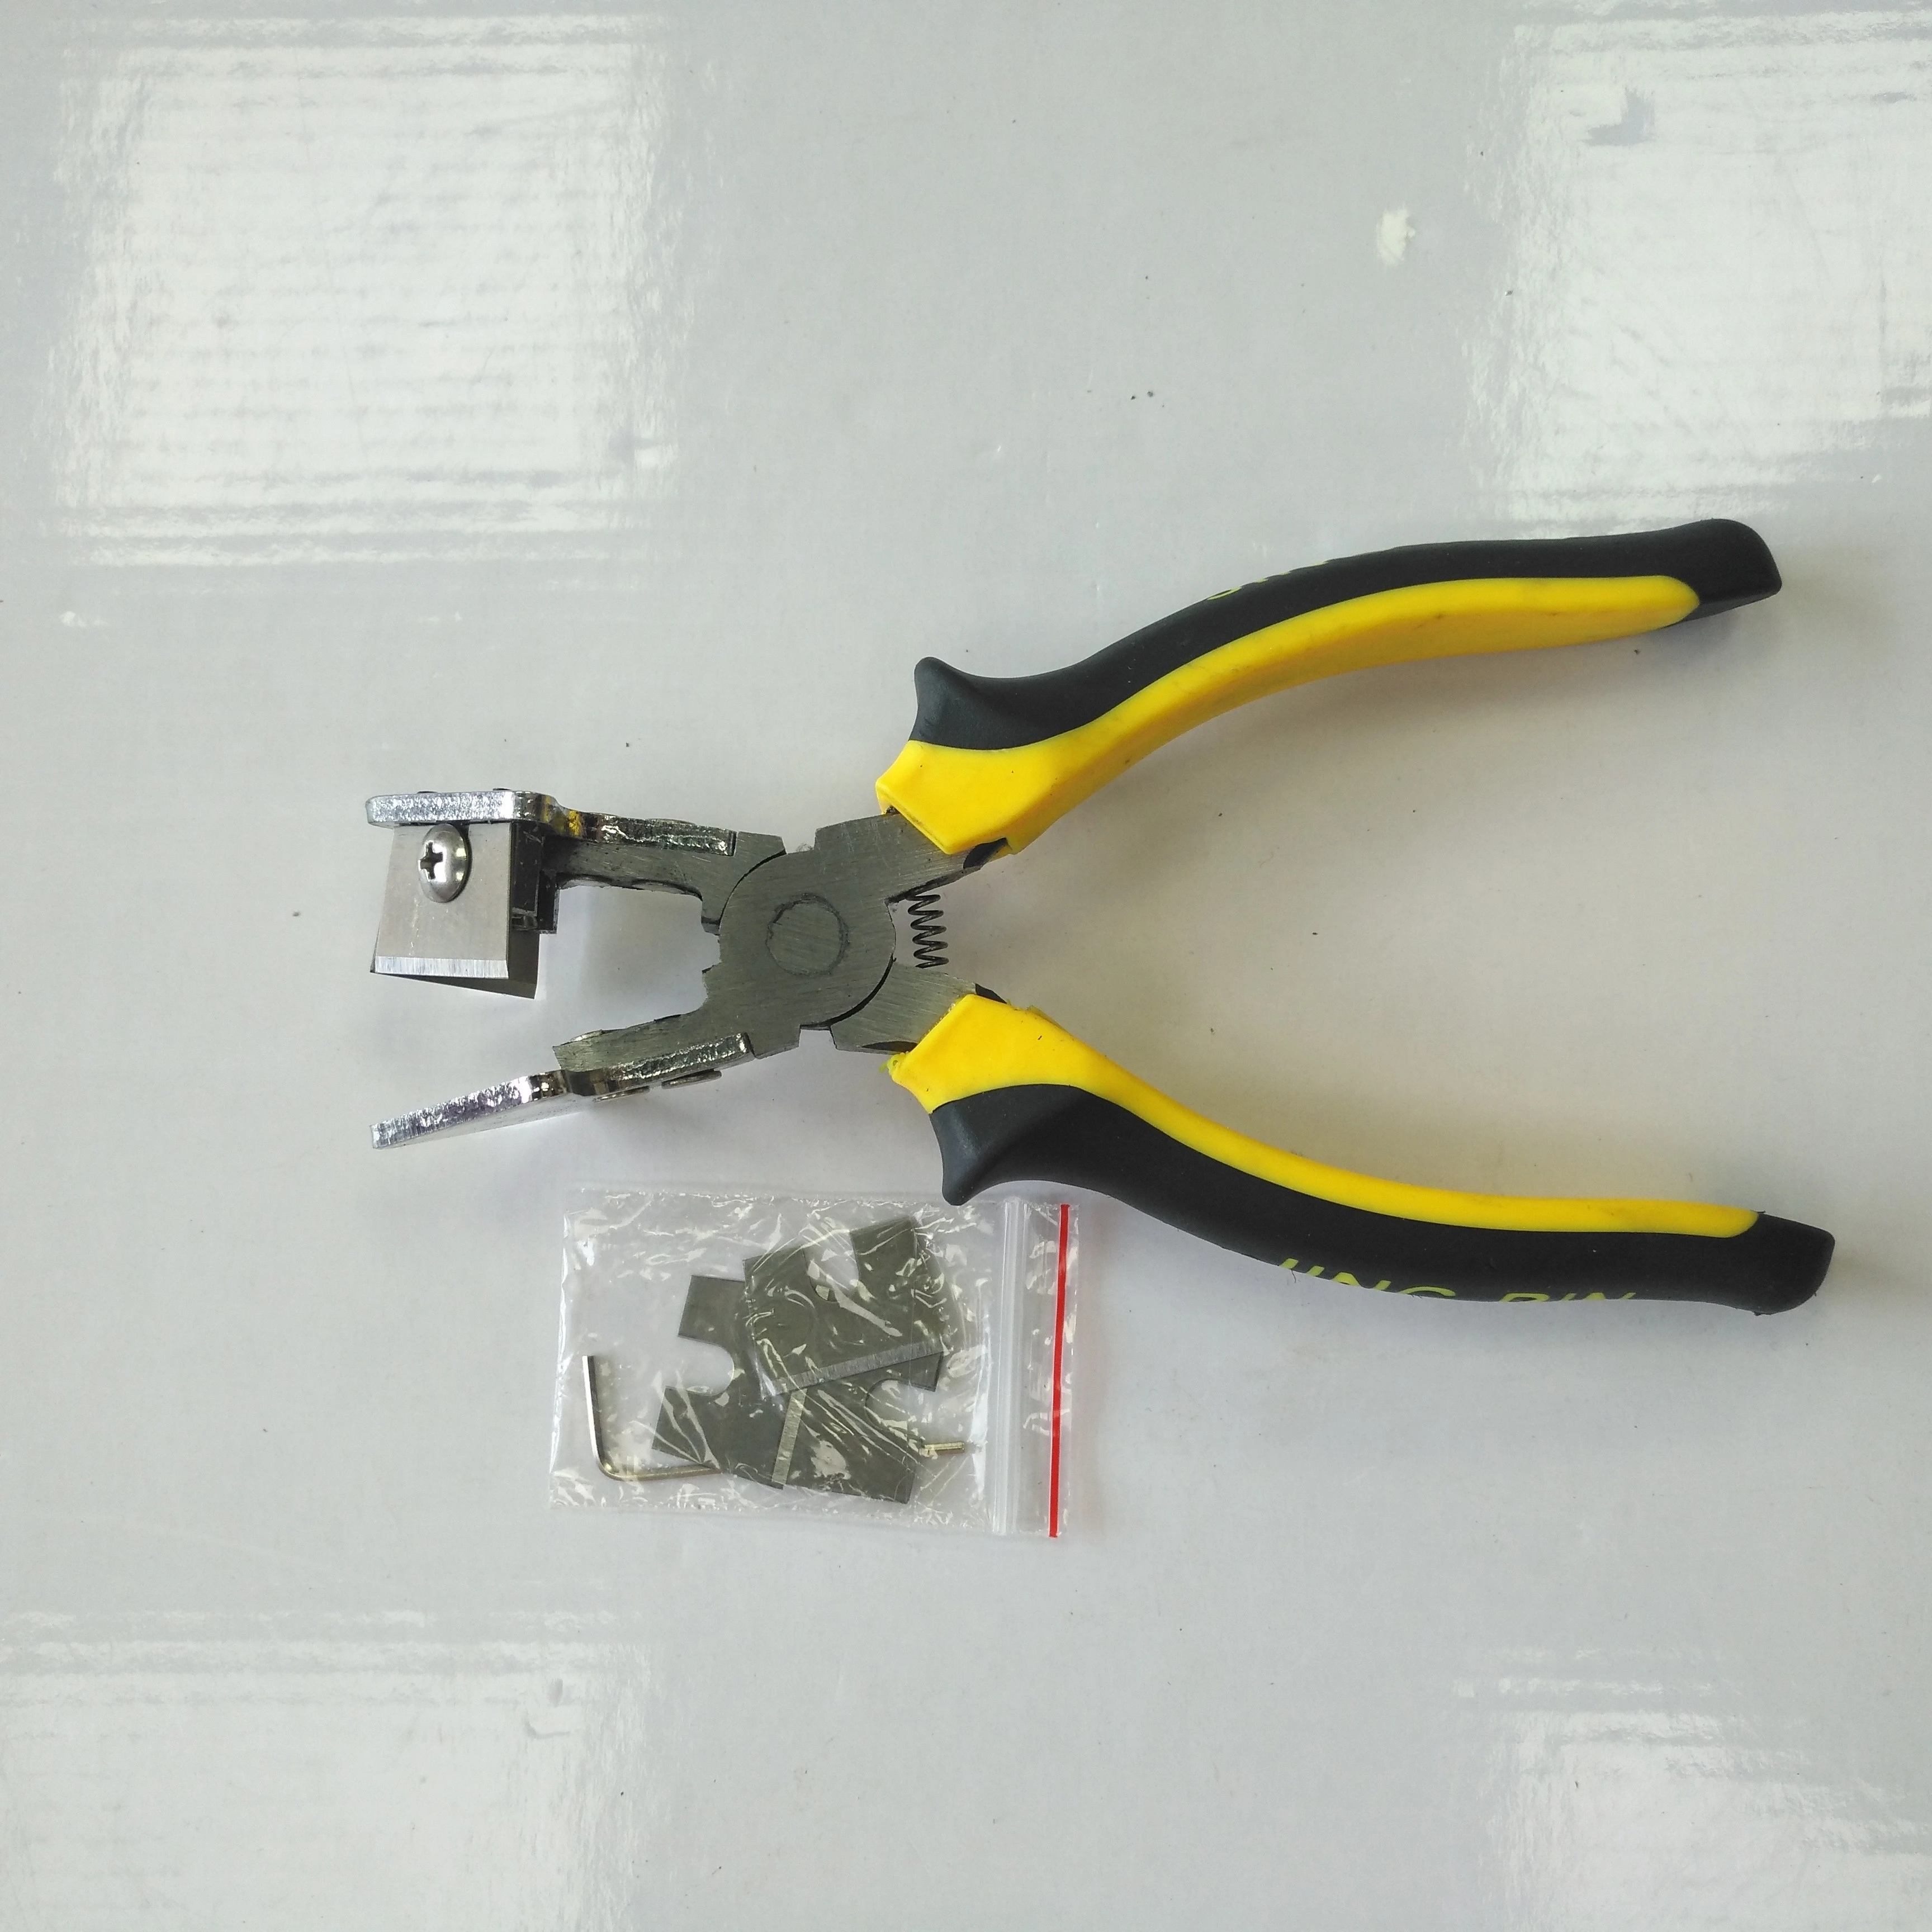 PVC handle security seal window rubber seal shears scissors